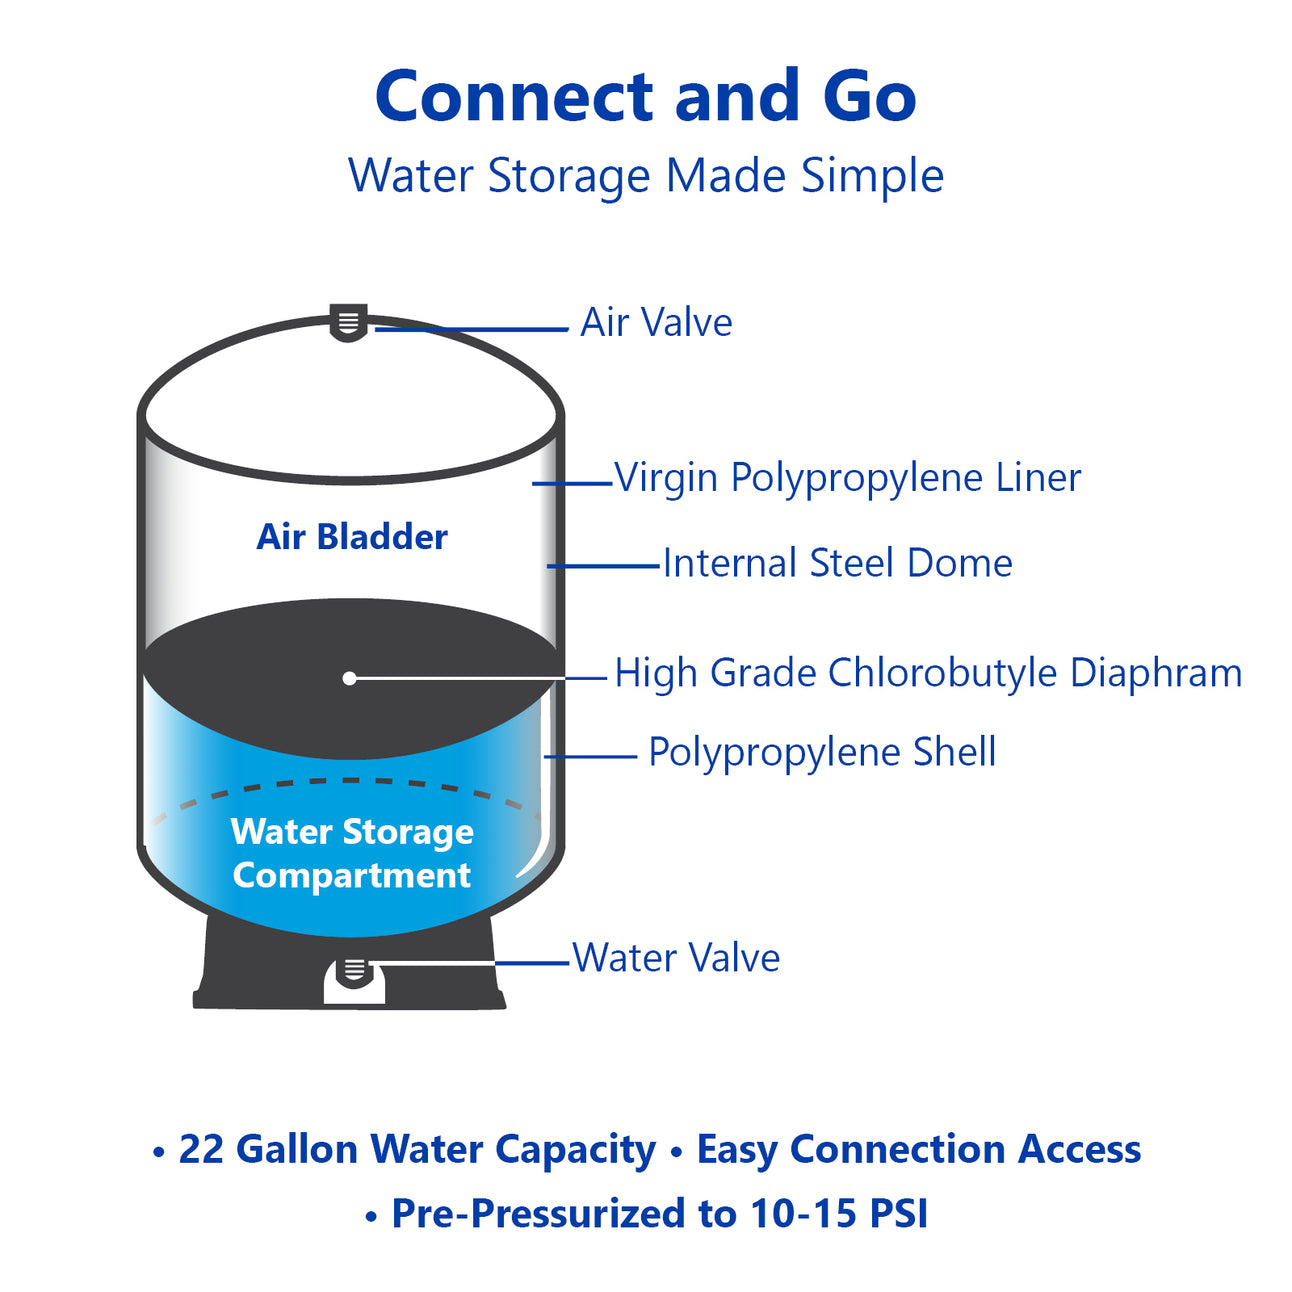 tankRO – RO Water Filtration System Expansion Tank – 40 Gallon